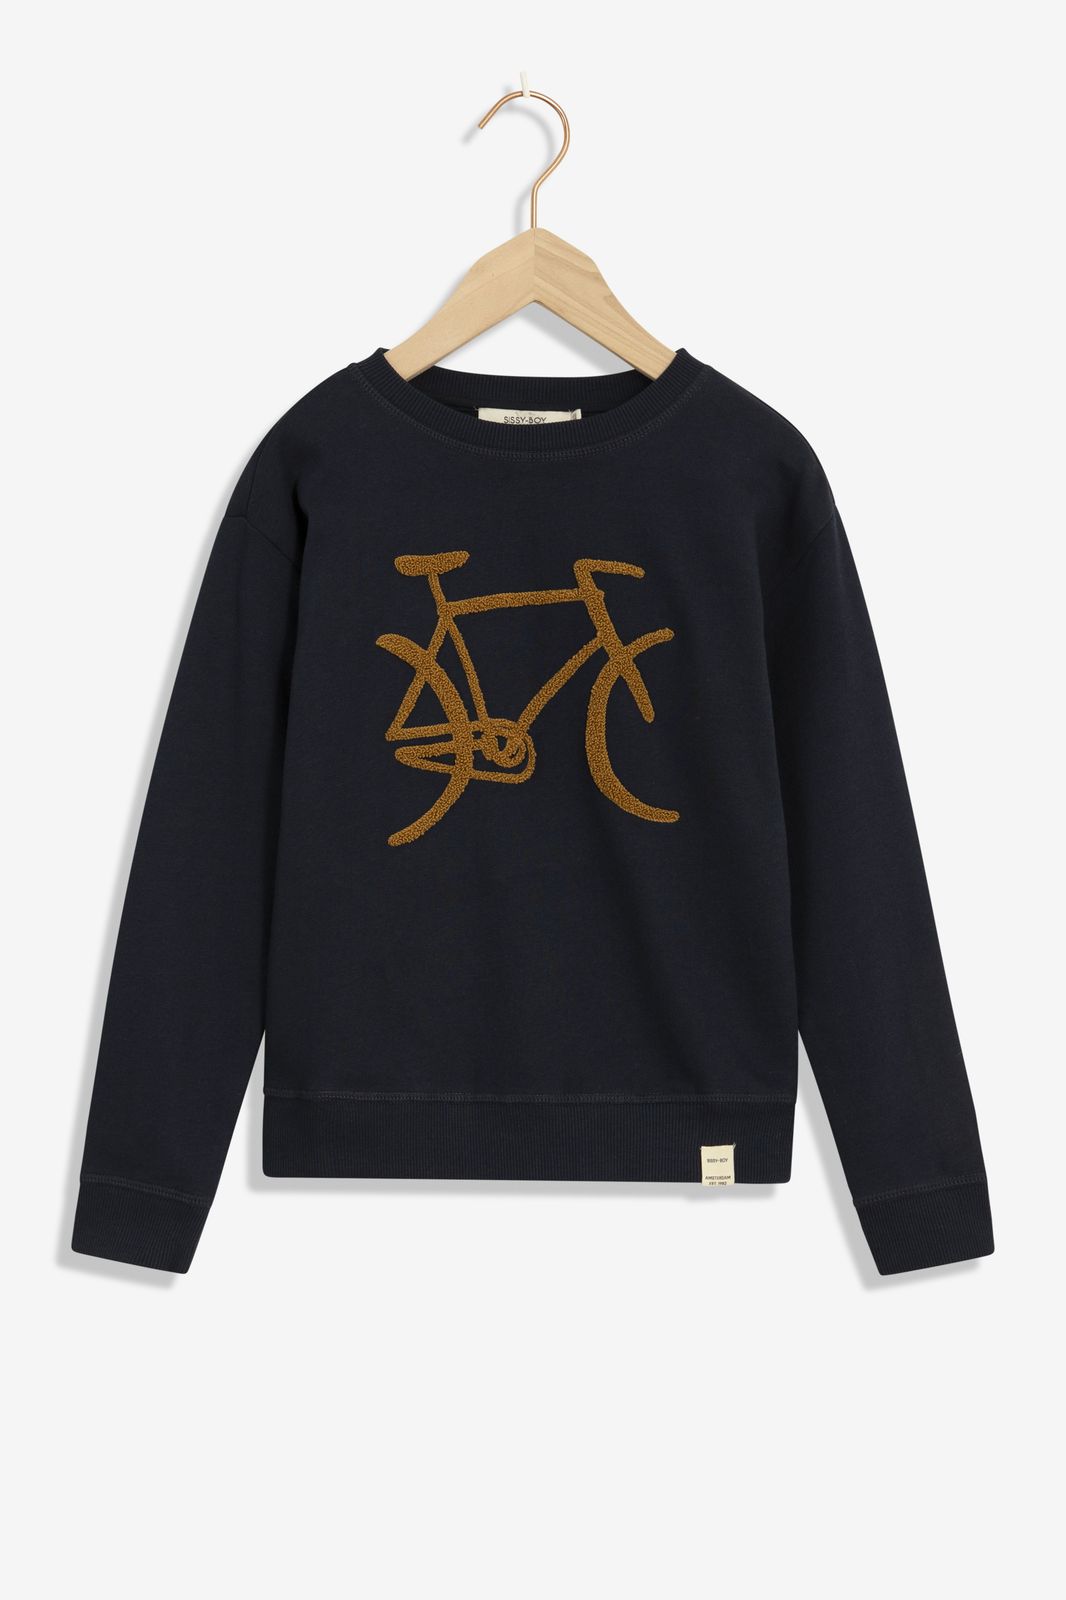 Donkerblauwe sweater met fiets print